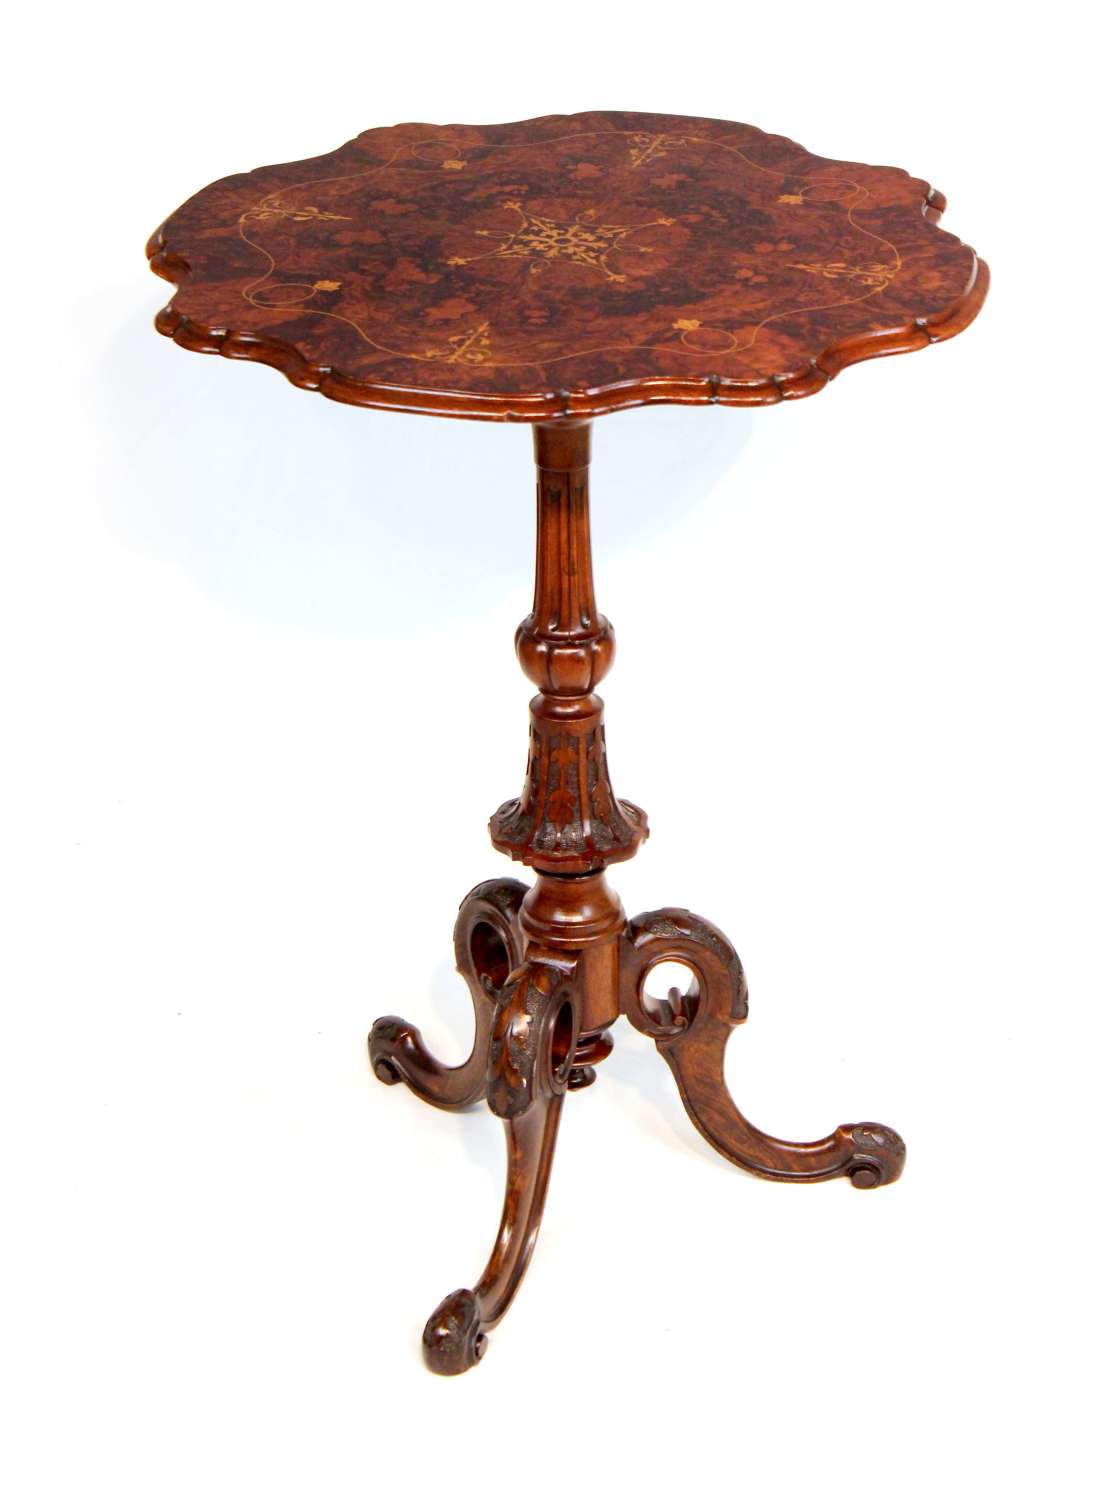 A Fine Quality Victorian Burr-Walnut Inlaid Scallop edge Tripod Table